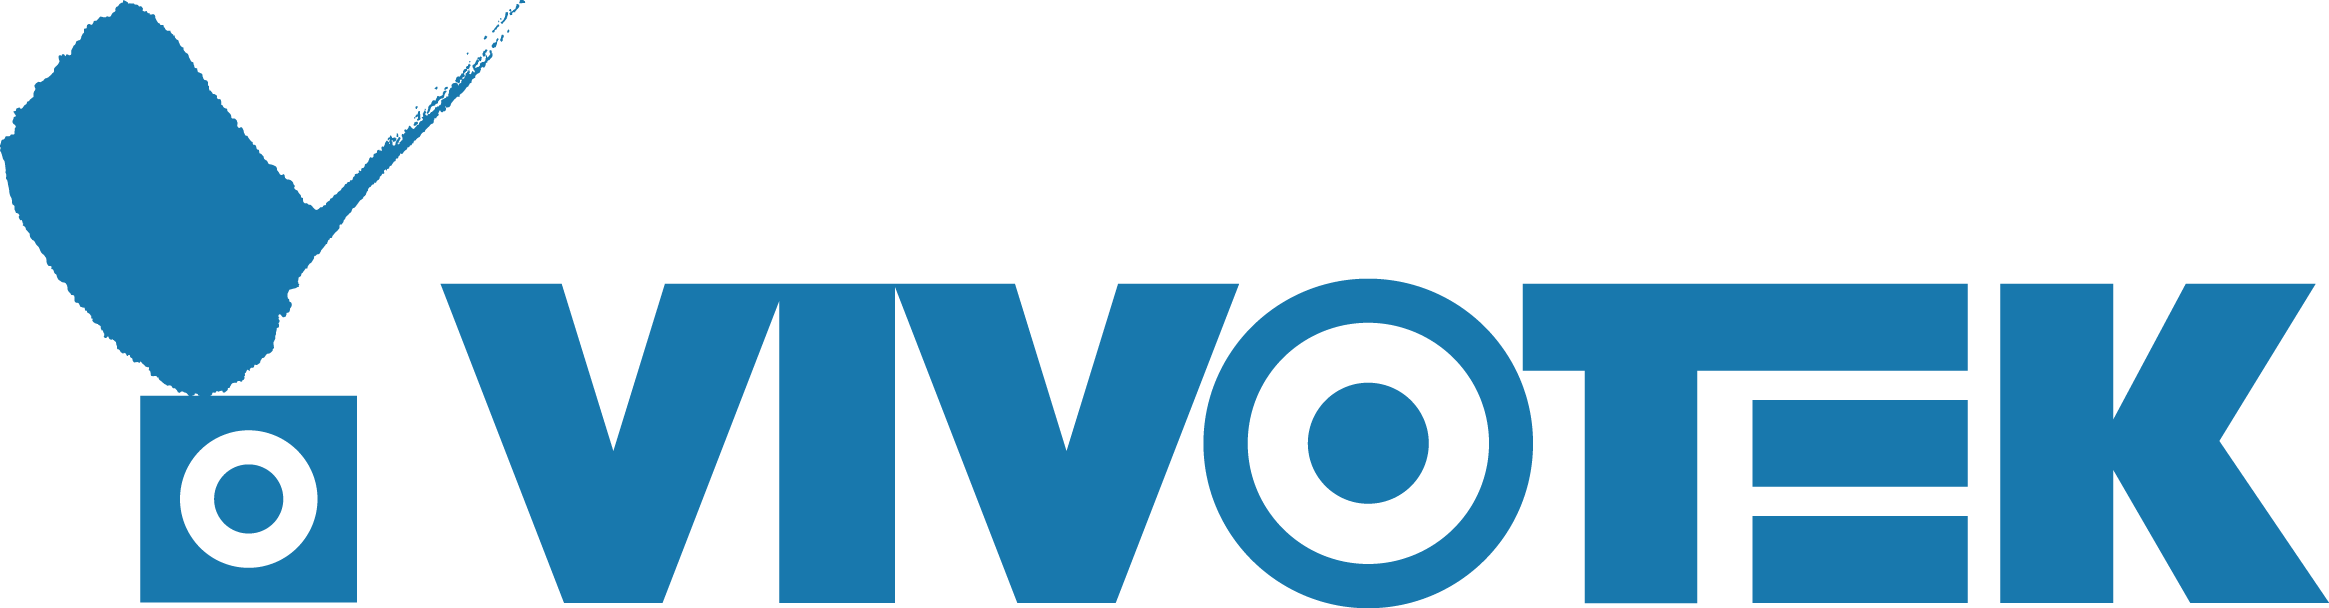 image of Vivotek Inc. logo